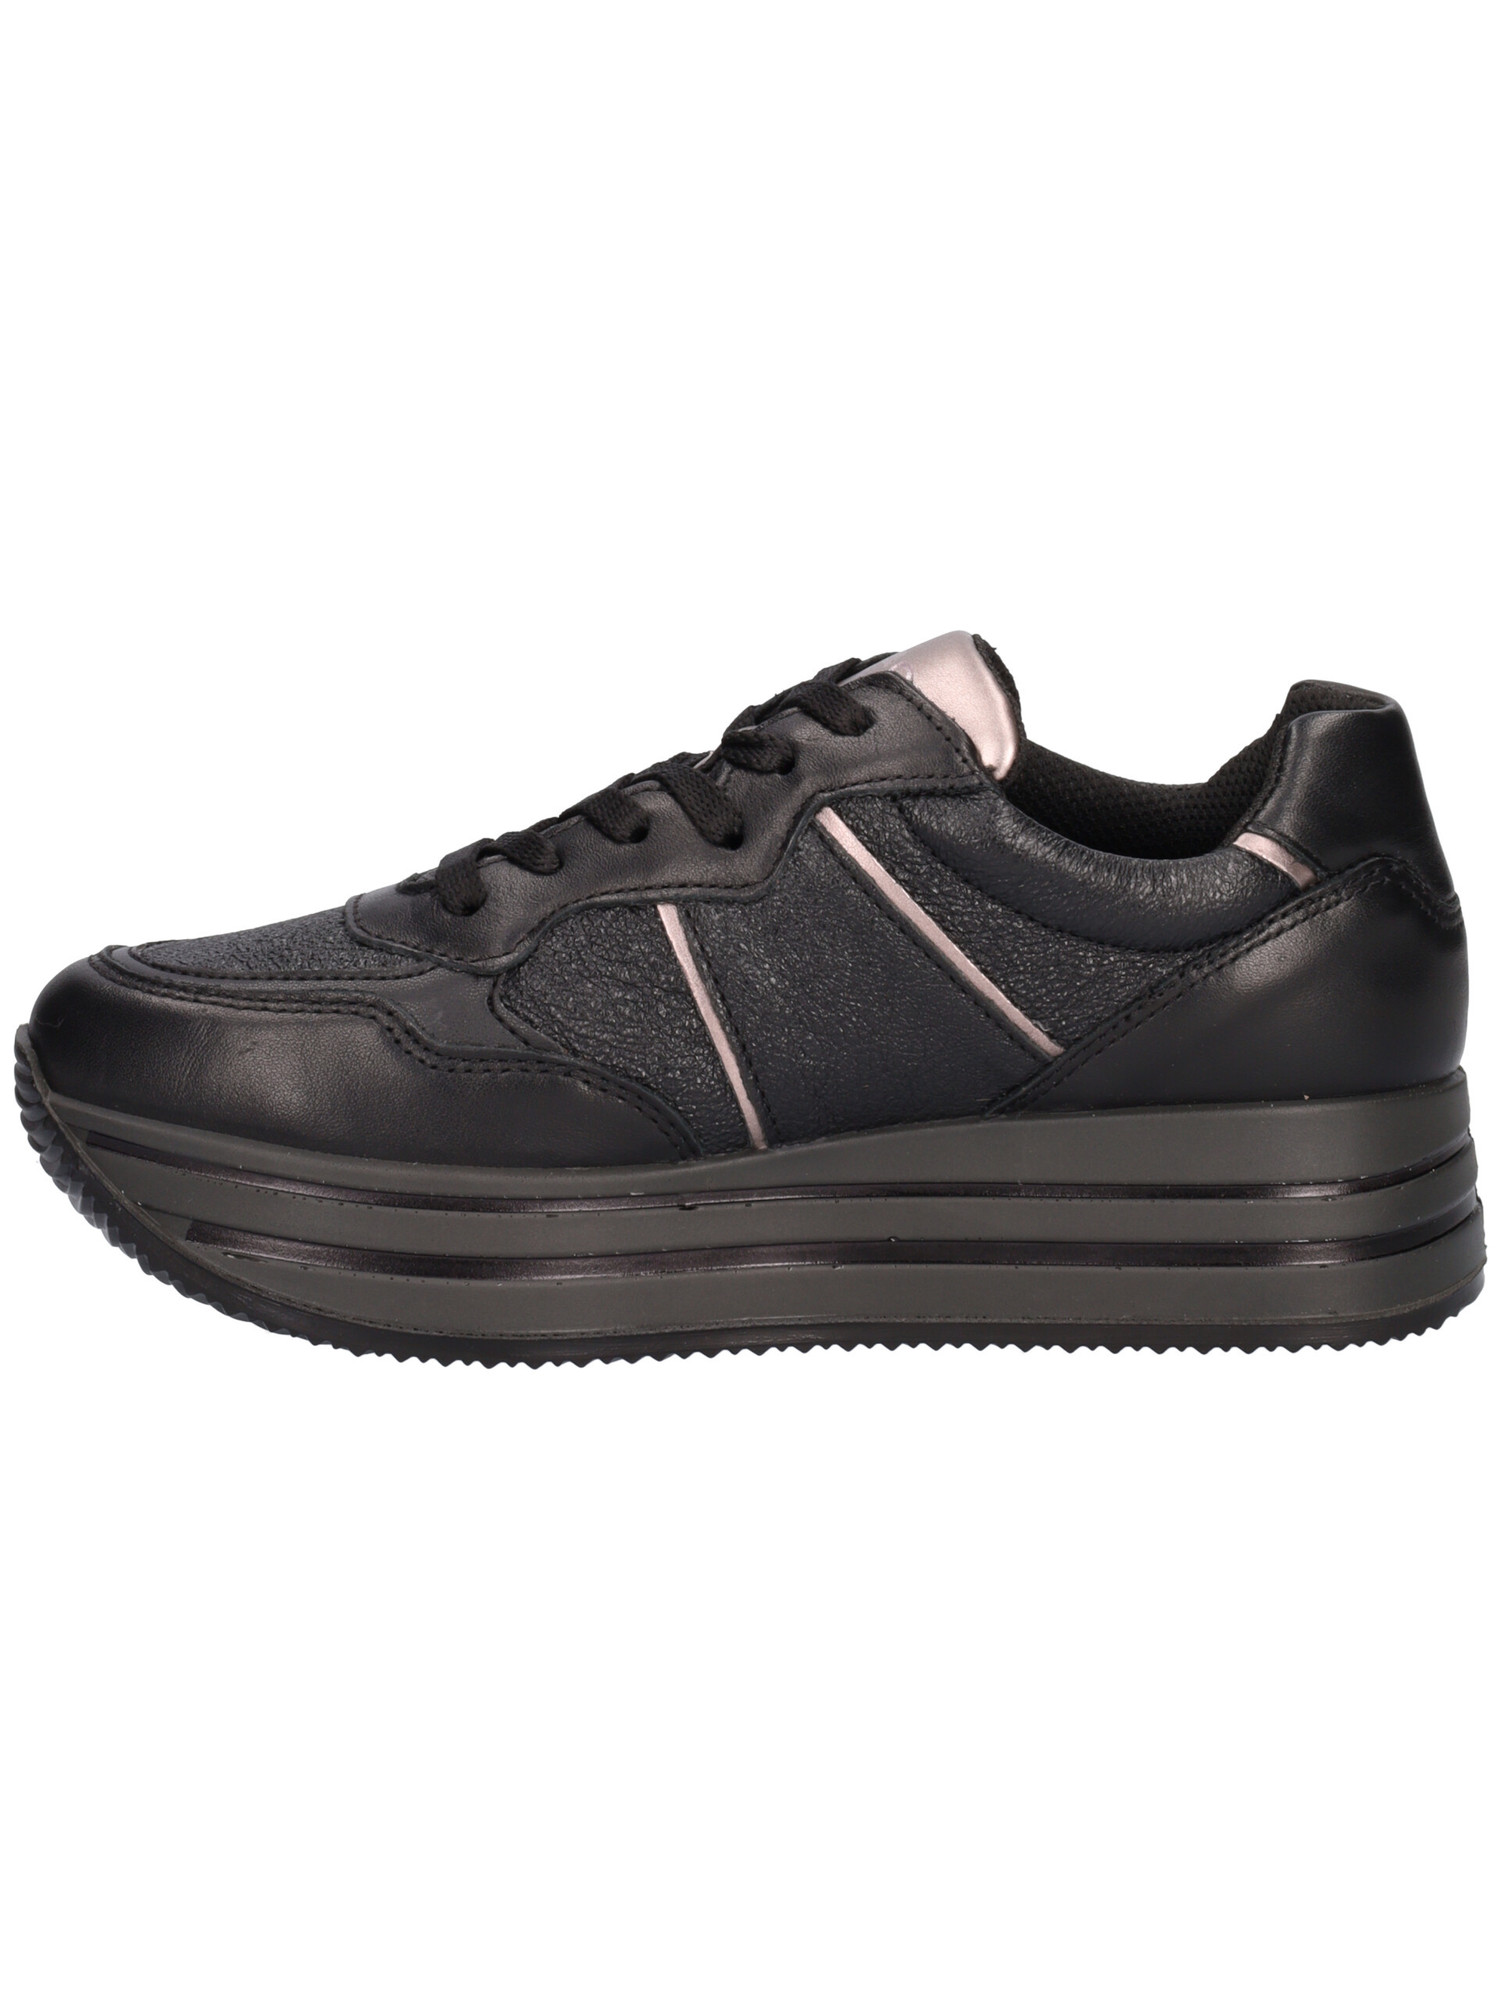 sneaker-platform-igi-and-co-da-donna-nera-3f01fa